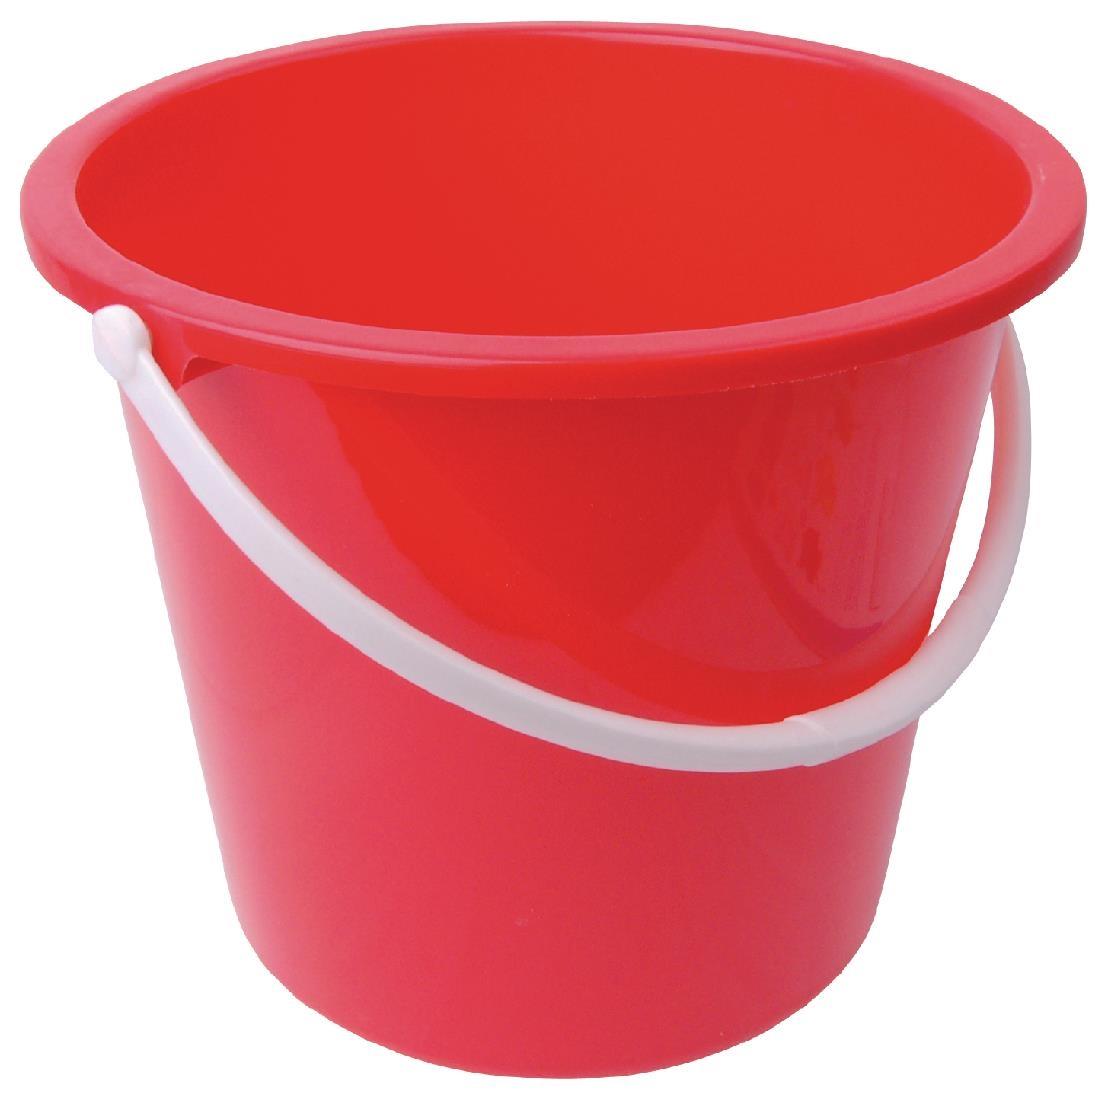 Jantex Round Plastic Bucket Red 10Ltr - CD807  - 1